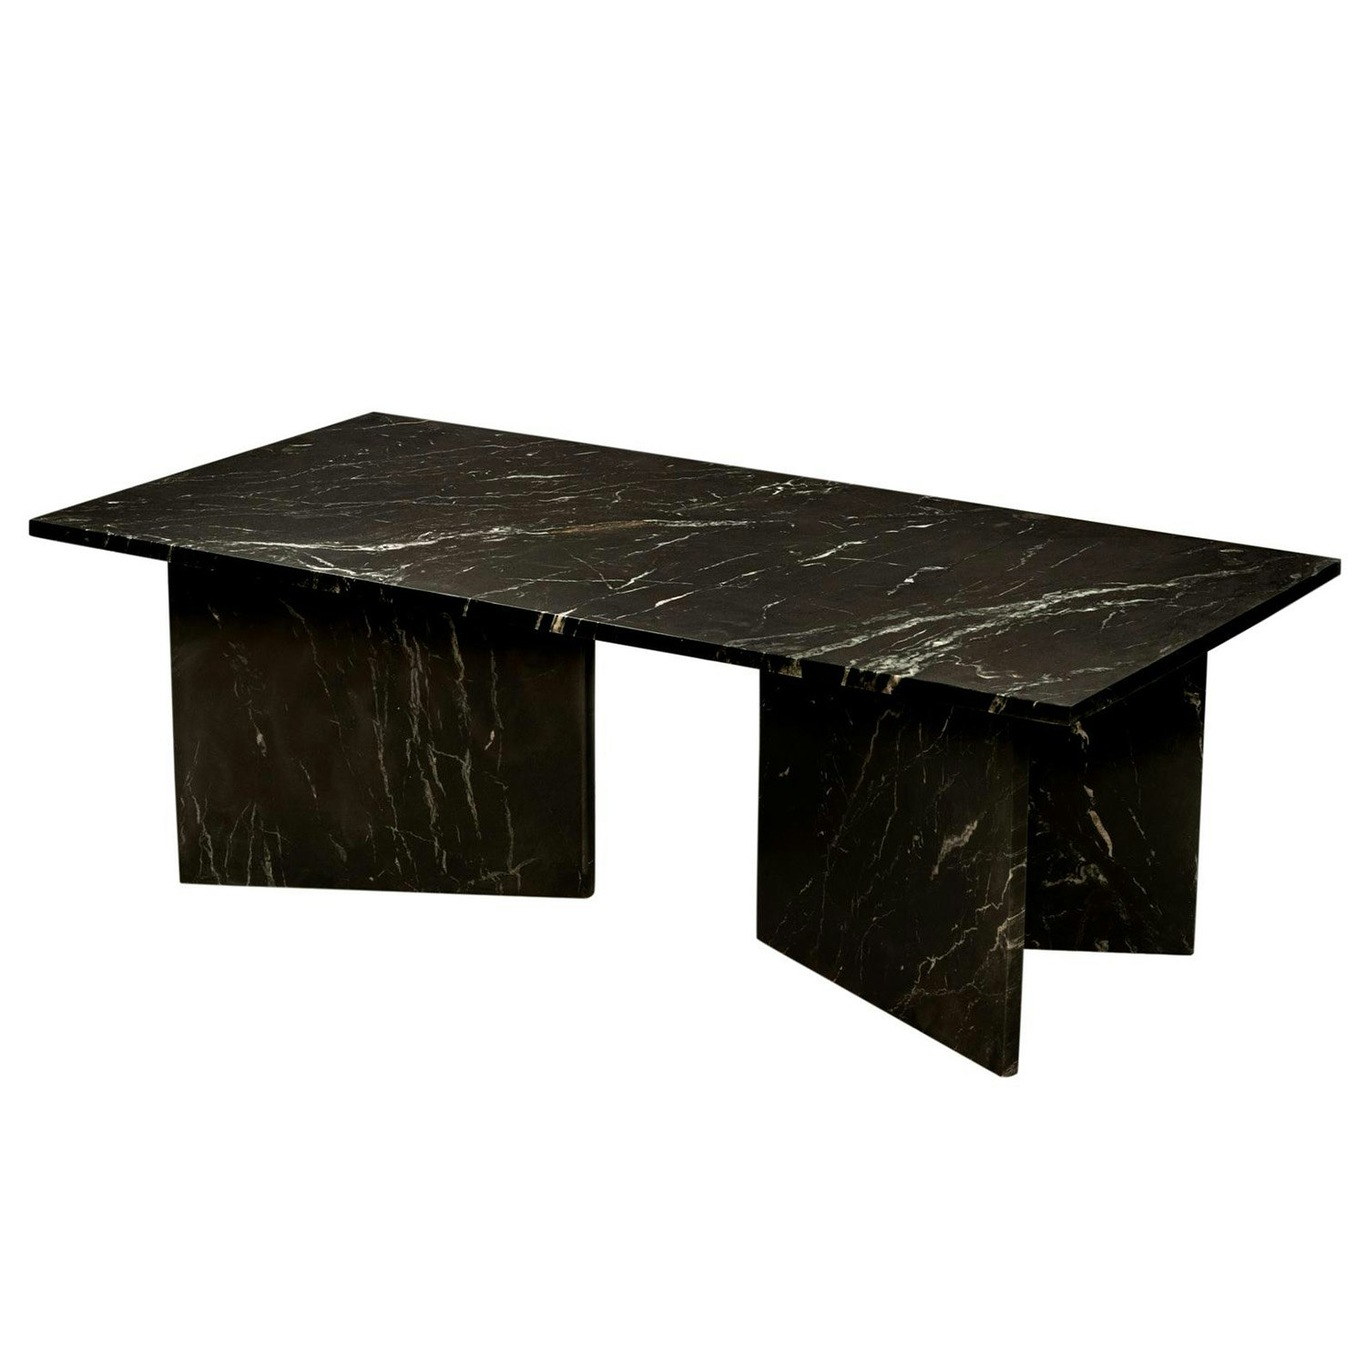 Geisli Coffee Table 120x60 cm, Black